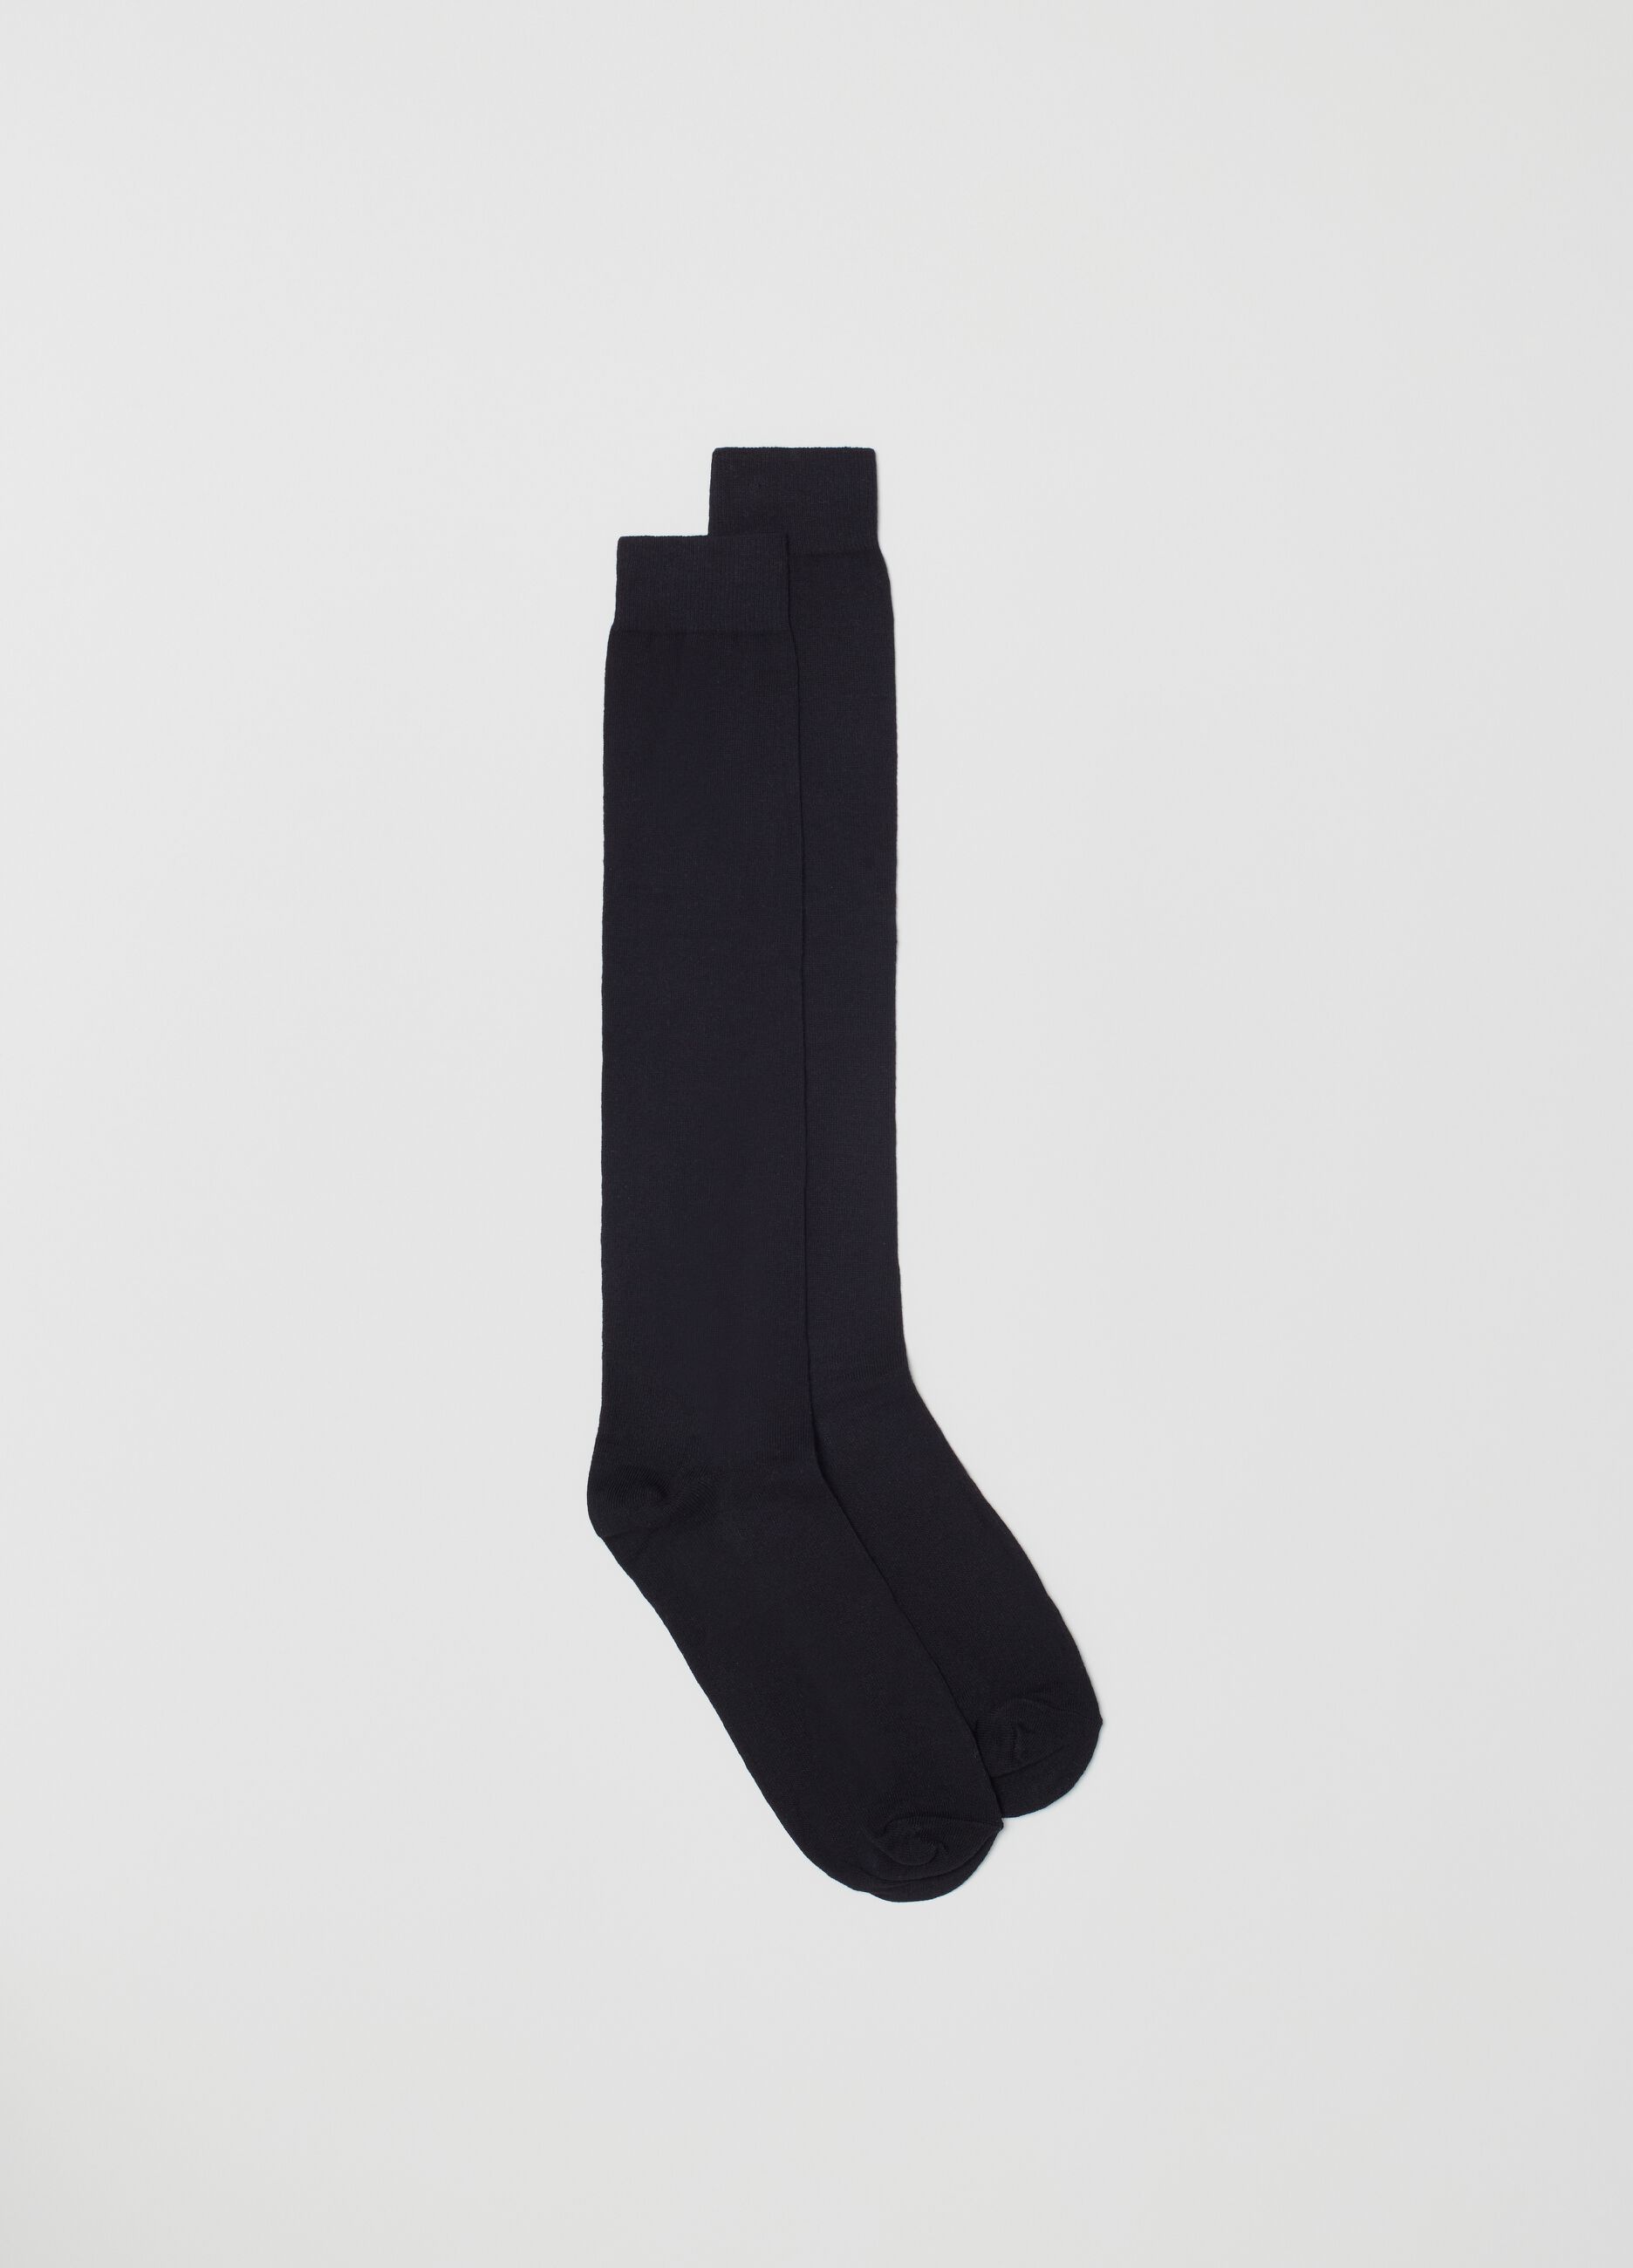 Seven-pair multipack long socks